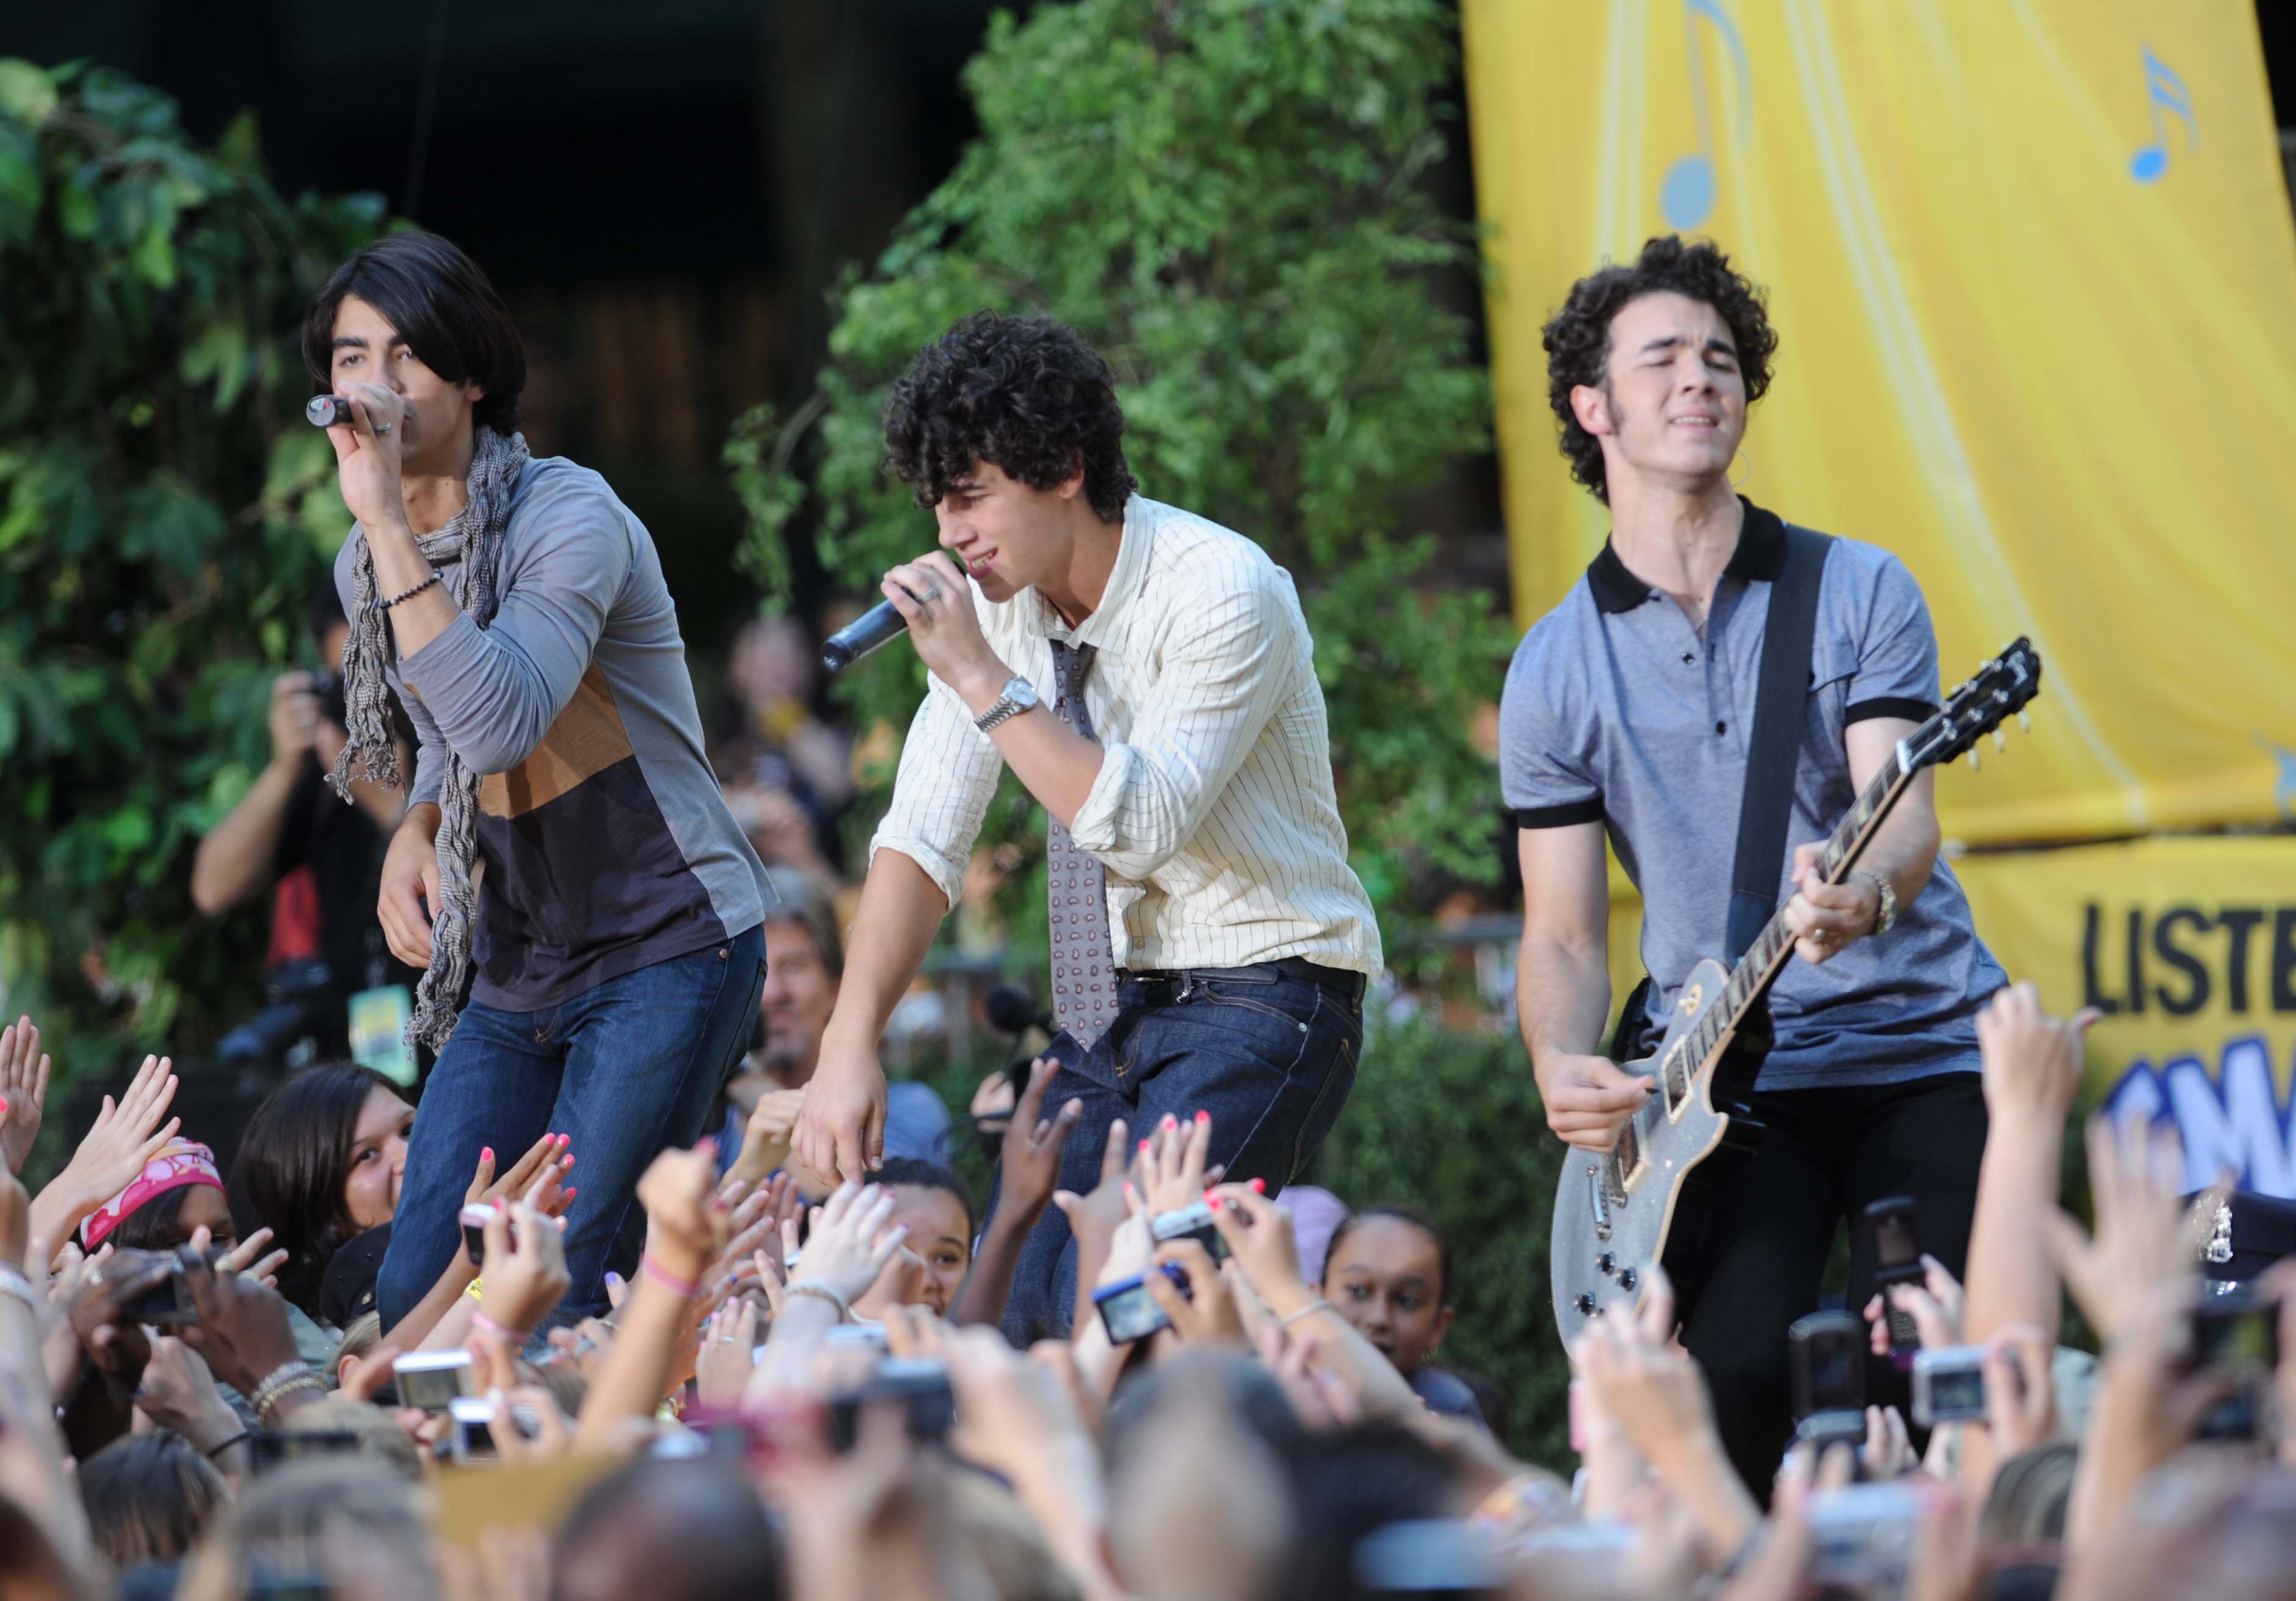 Jonas Brothers Photo, News, and Videos. Just Jared Jr